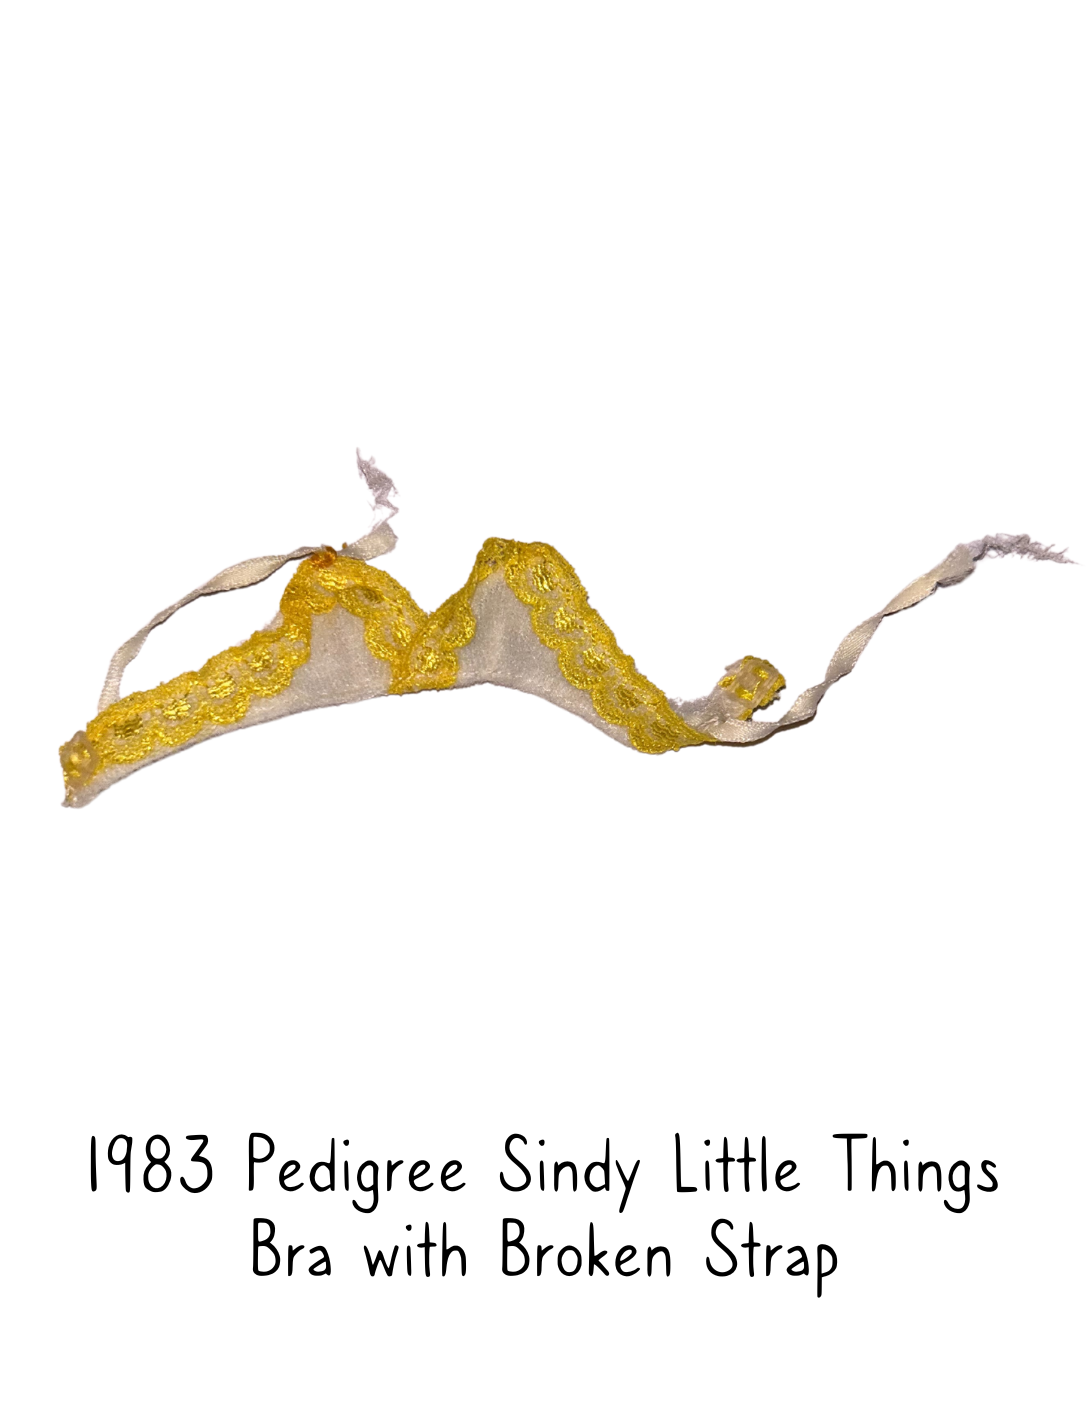 1983 Pedigree Sindy Little Things Lingerie Bra with Broken Strap